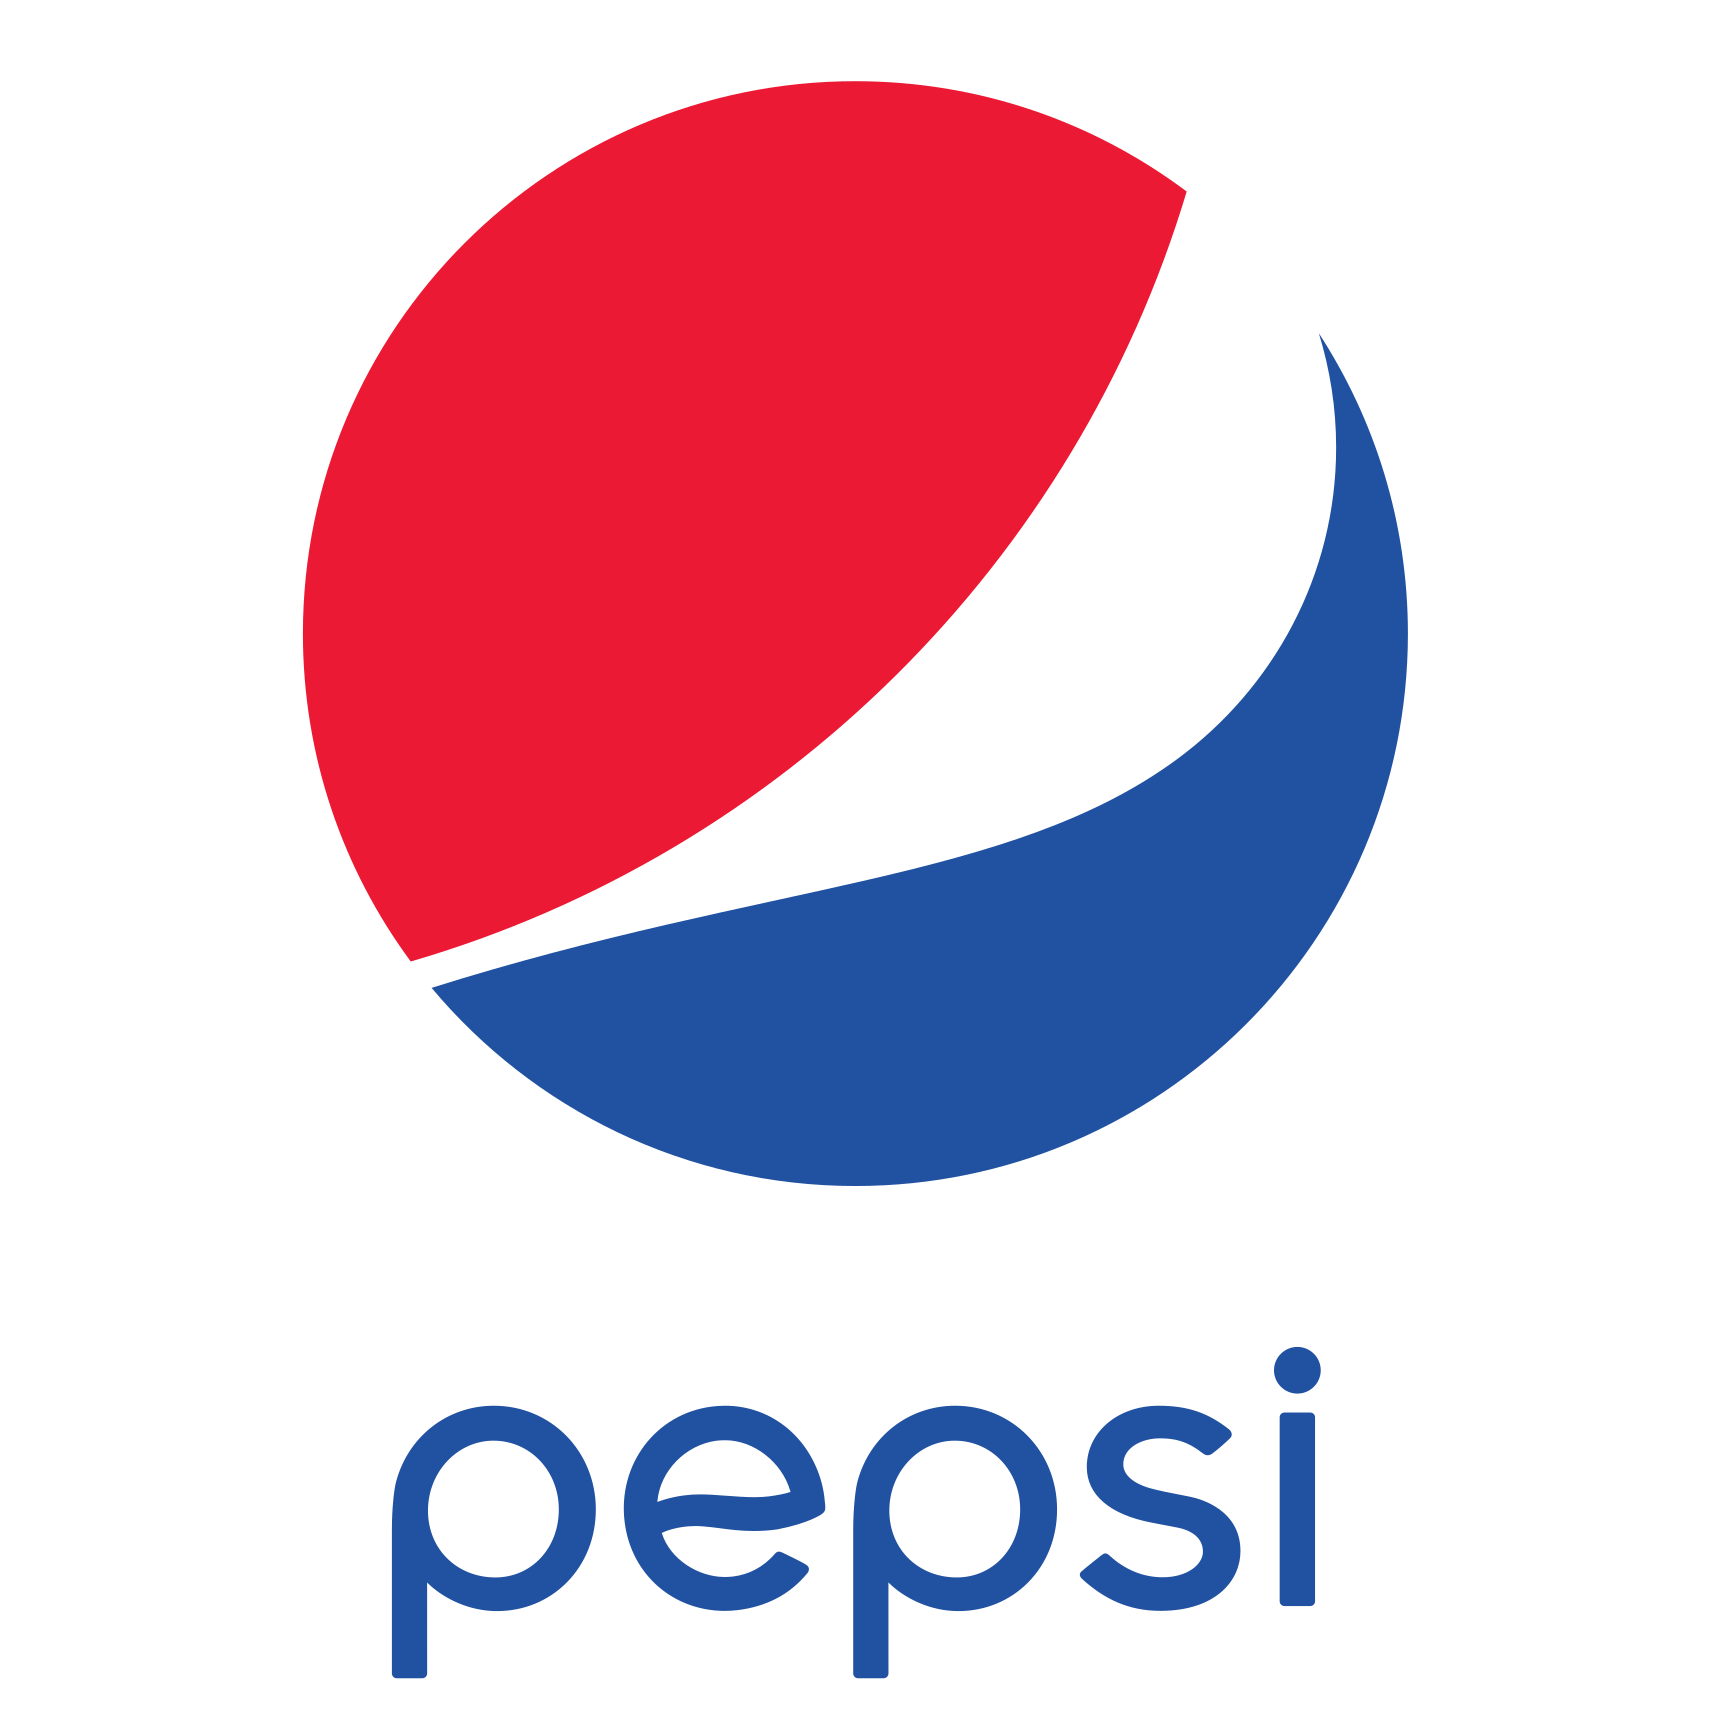 Pepsi_logo_2014.svg copy.png